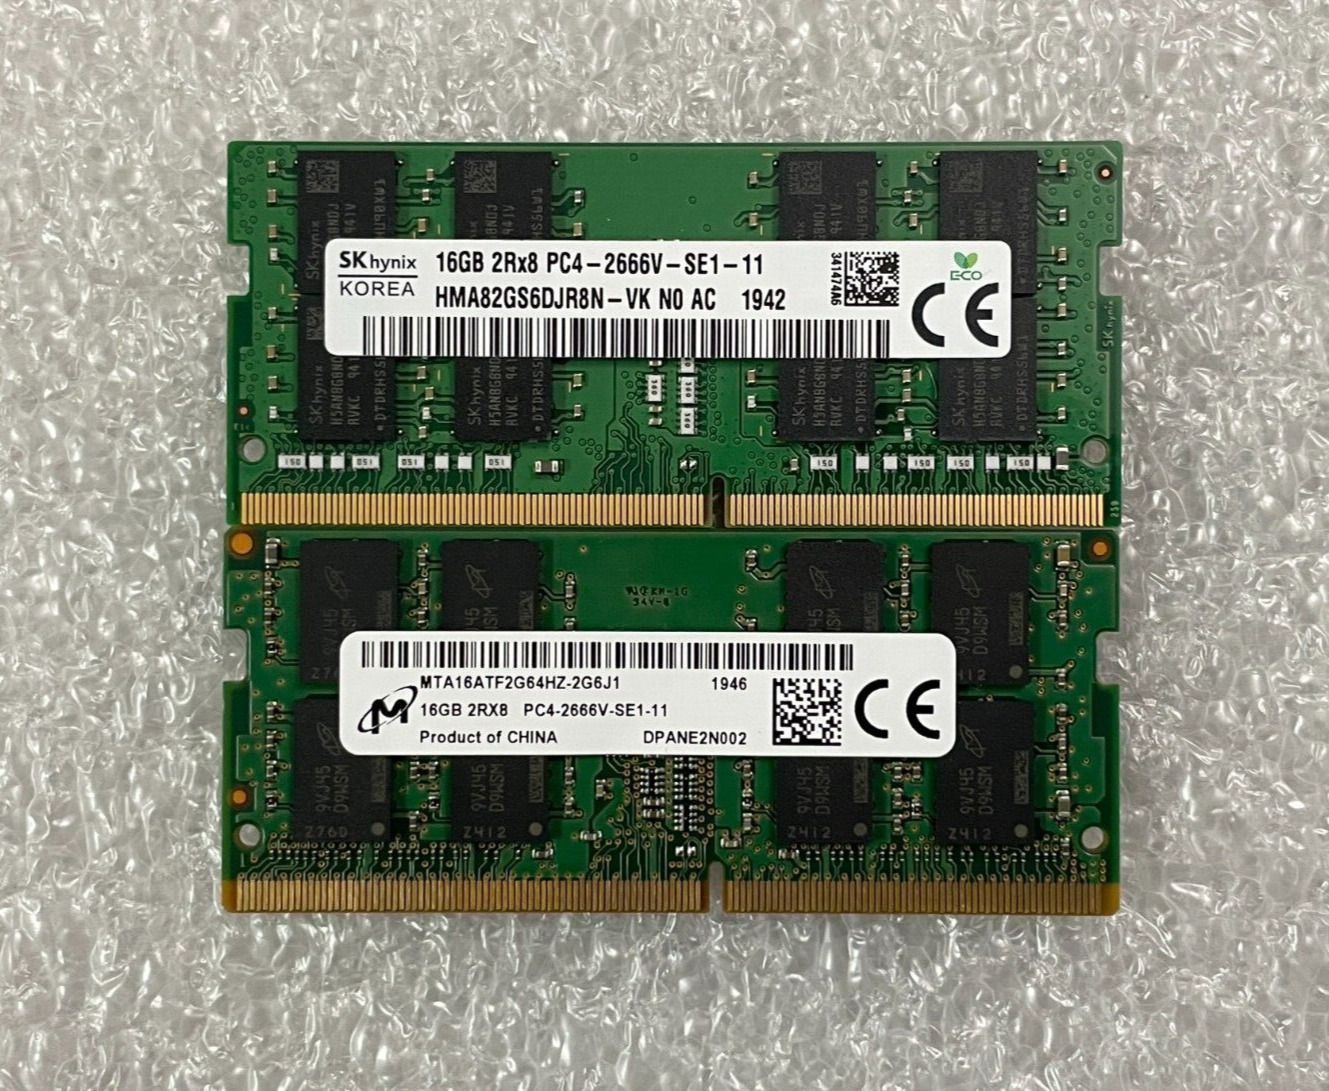 Hynix Micron 32GB (2x 16GB) 2RX8 PC4-2666V DDR4 SO-DIMM Laptop Memory RAM